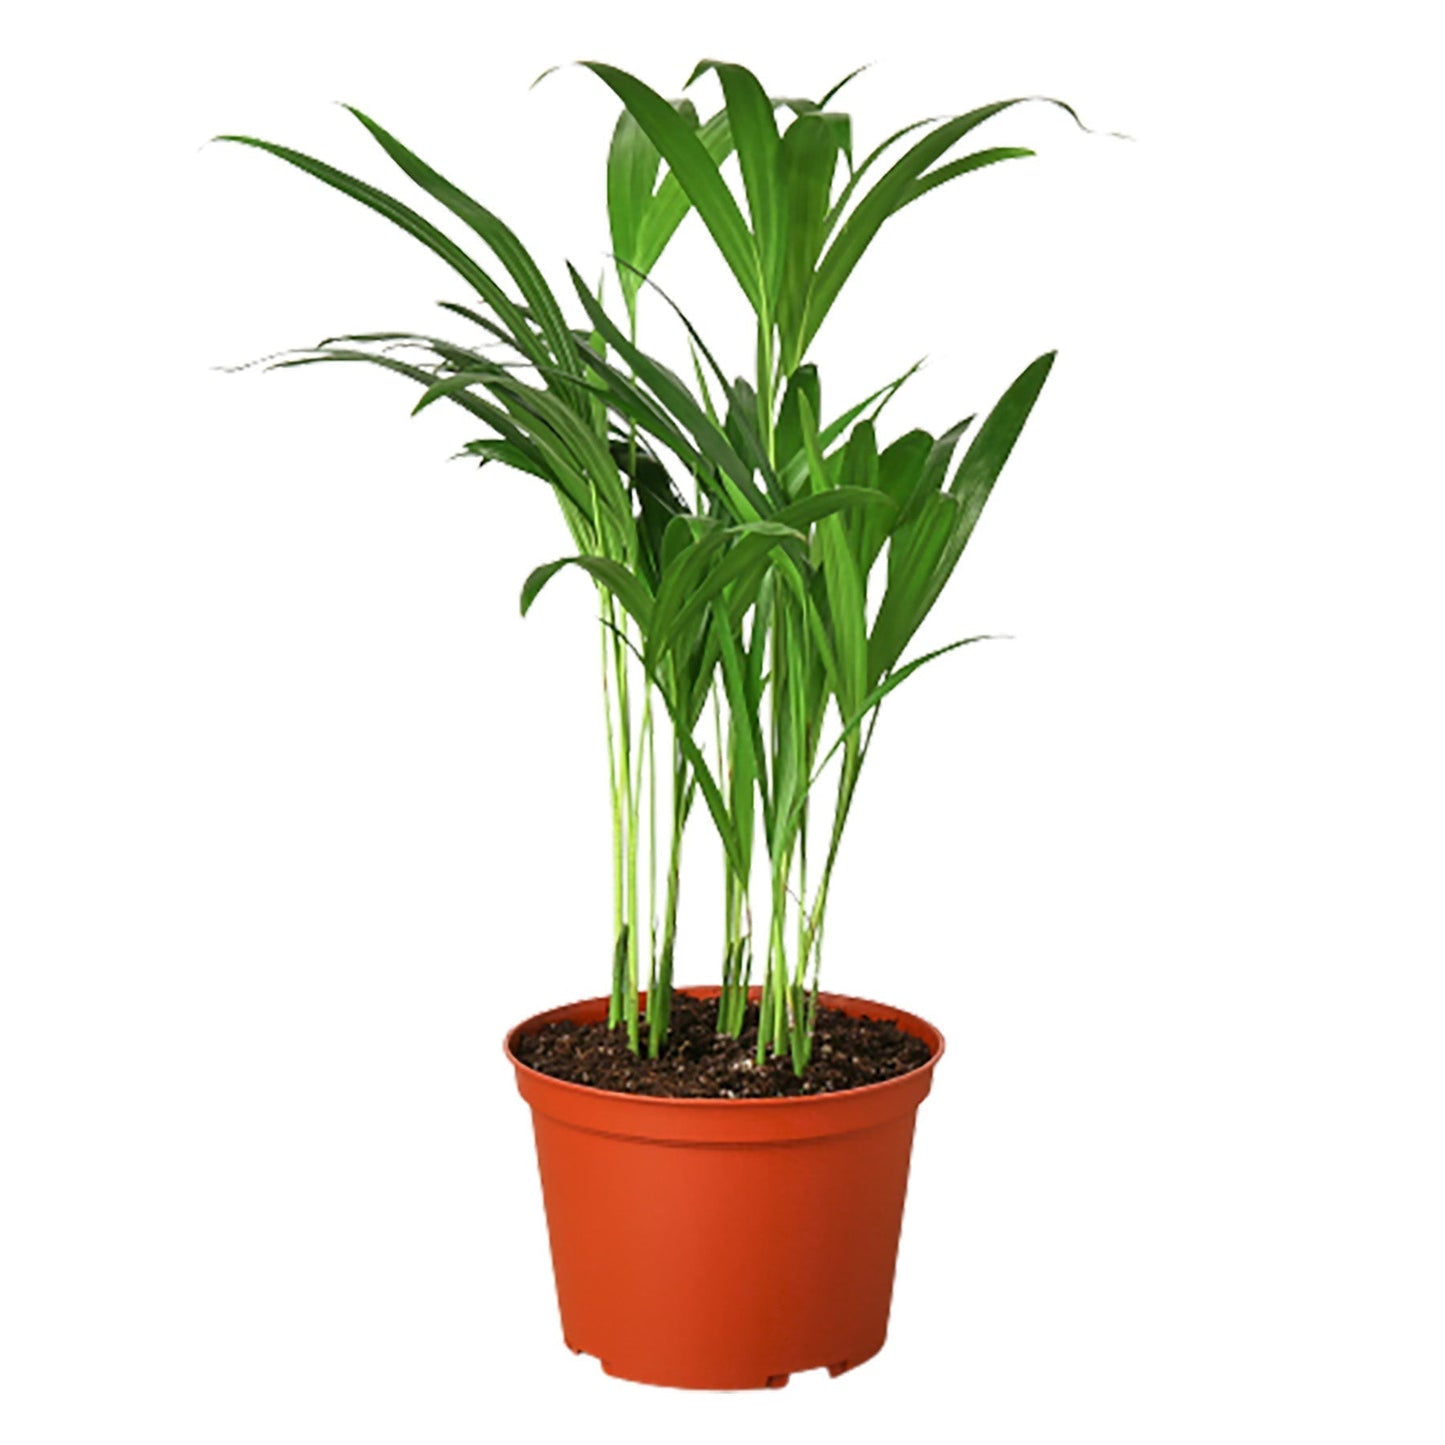 Areca Palm - 6" Pot - NURSERY POT ONLY - One Beleaf Away Plant Studio